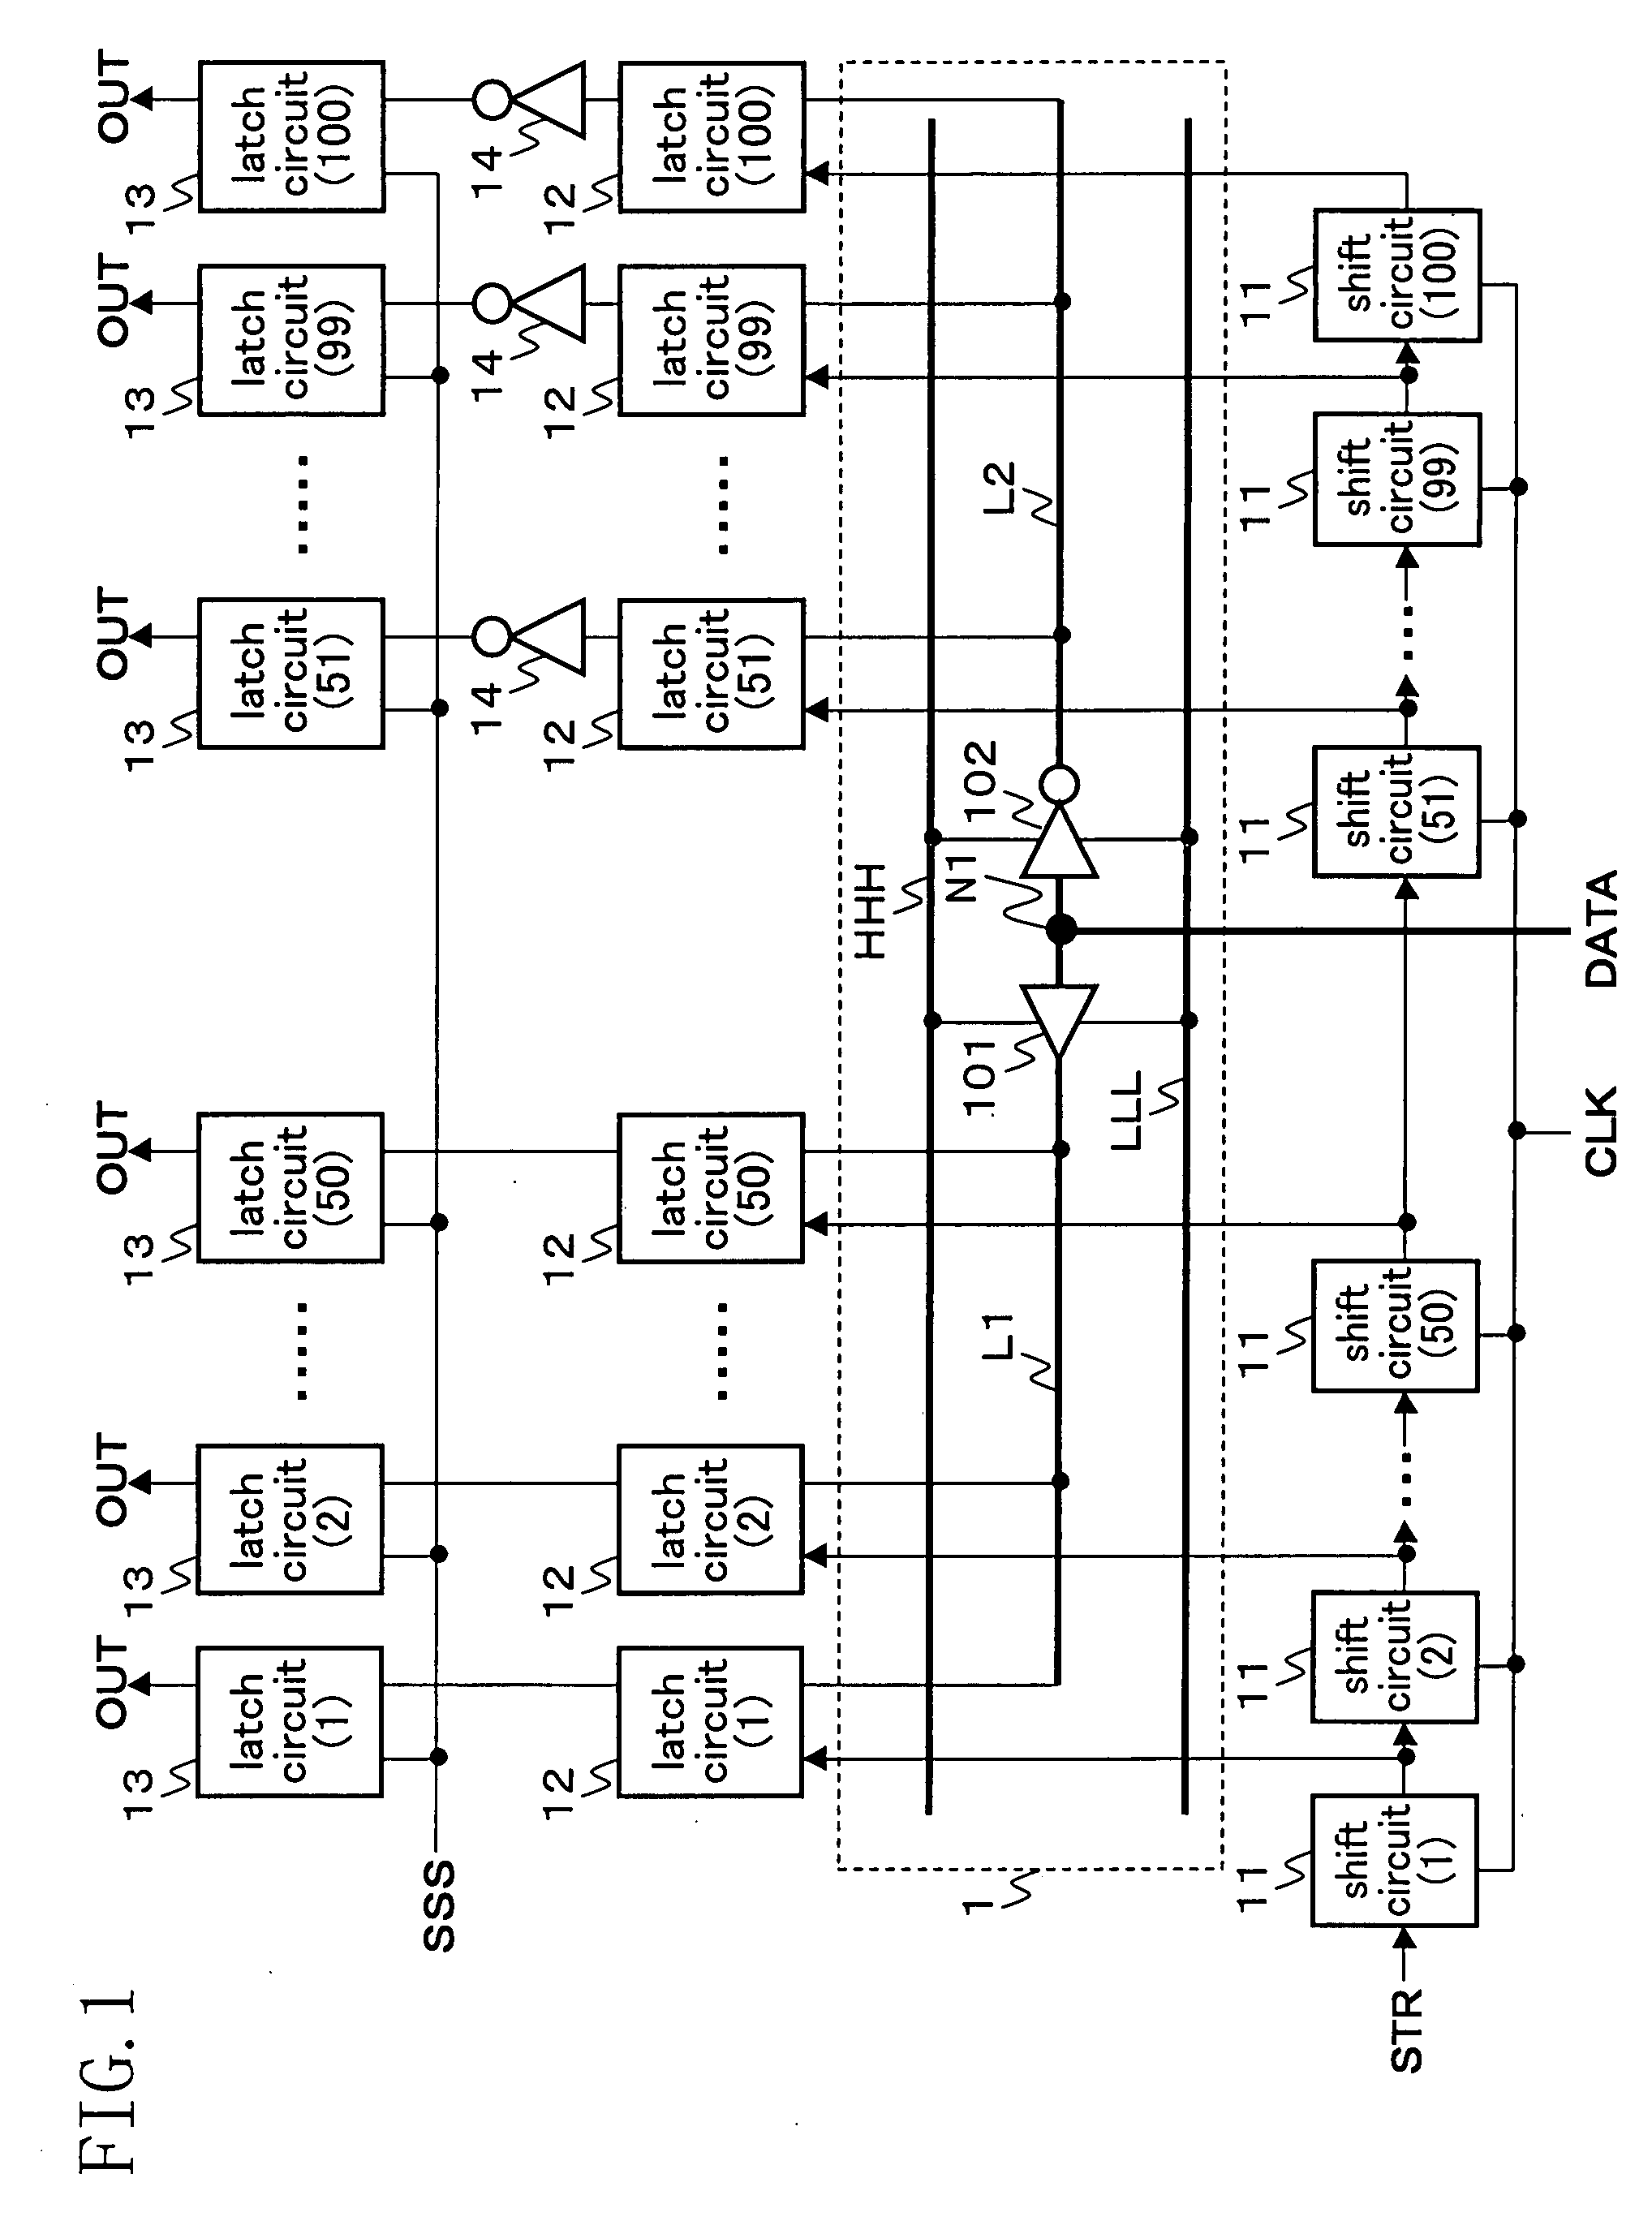 Signal transfer circuit, display data processing apparatus, and display apparatus